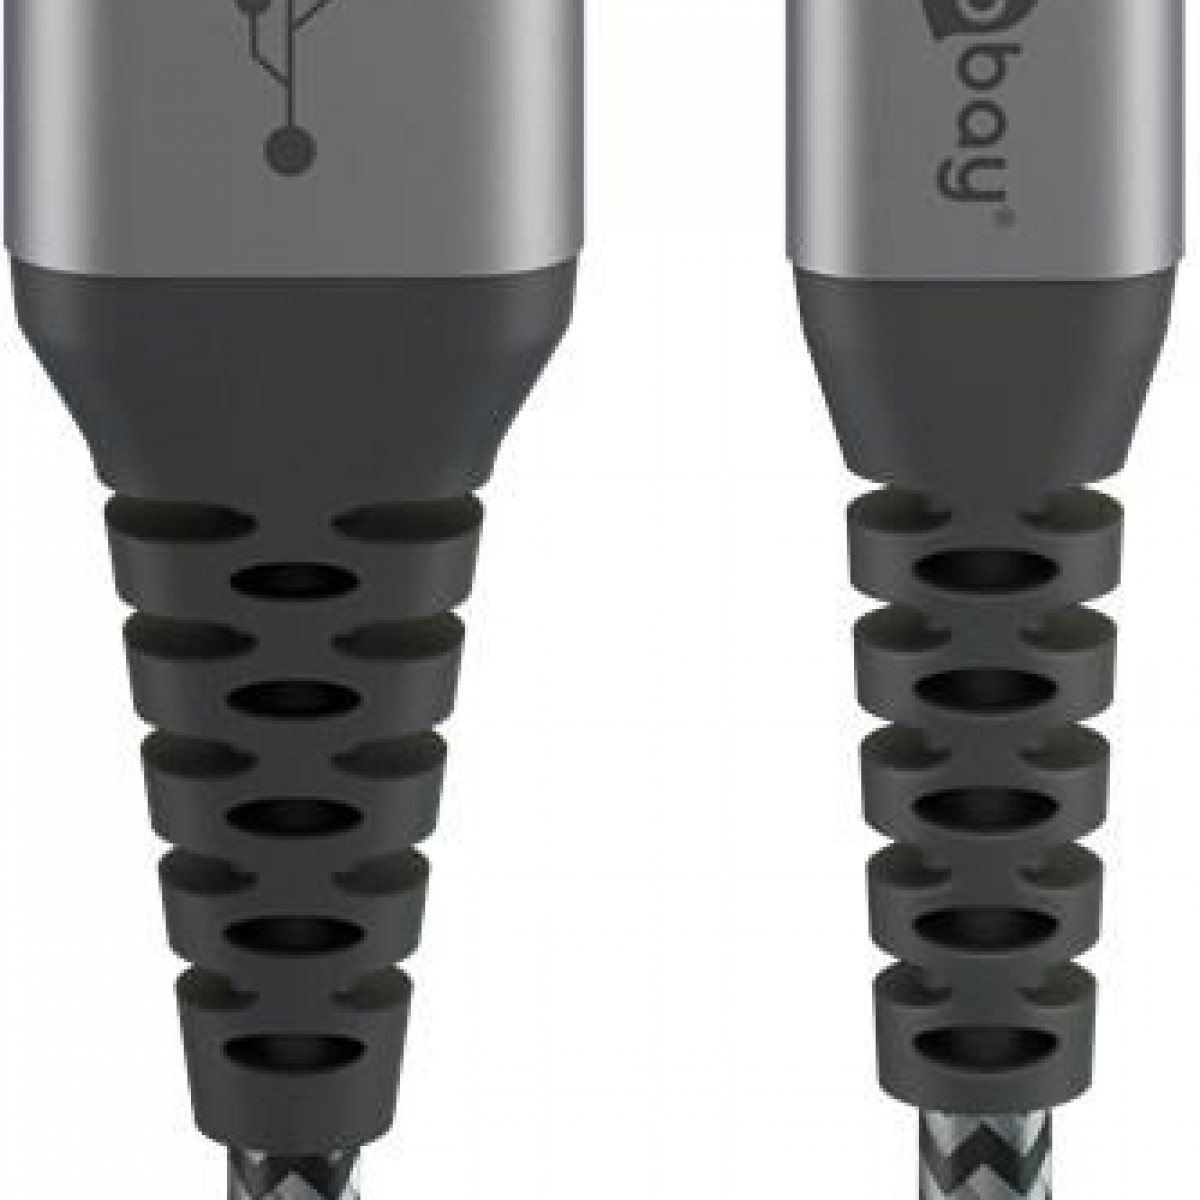 Metallsteckern (spacegrau/silber), auf Lightning 0,5 Textilkabel kabel, USB-A mit GOOBAY m Lightning